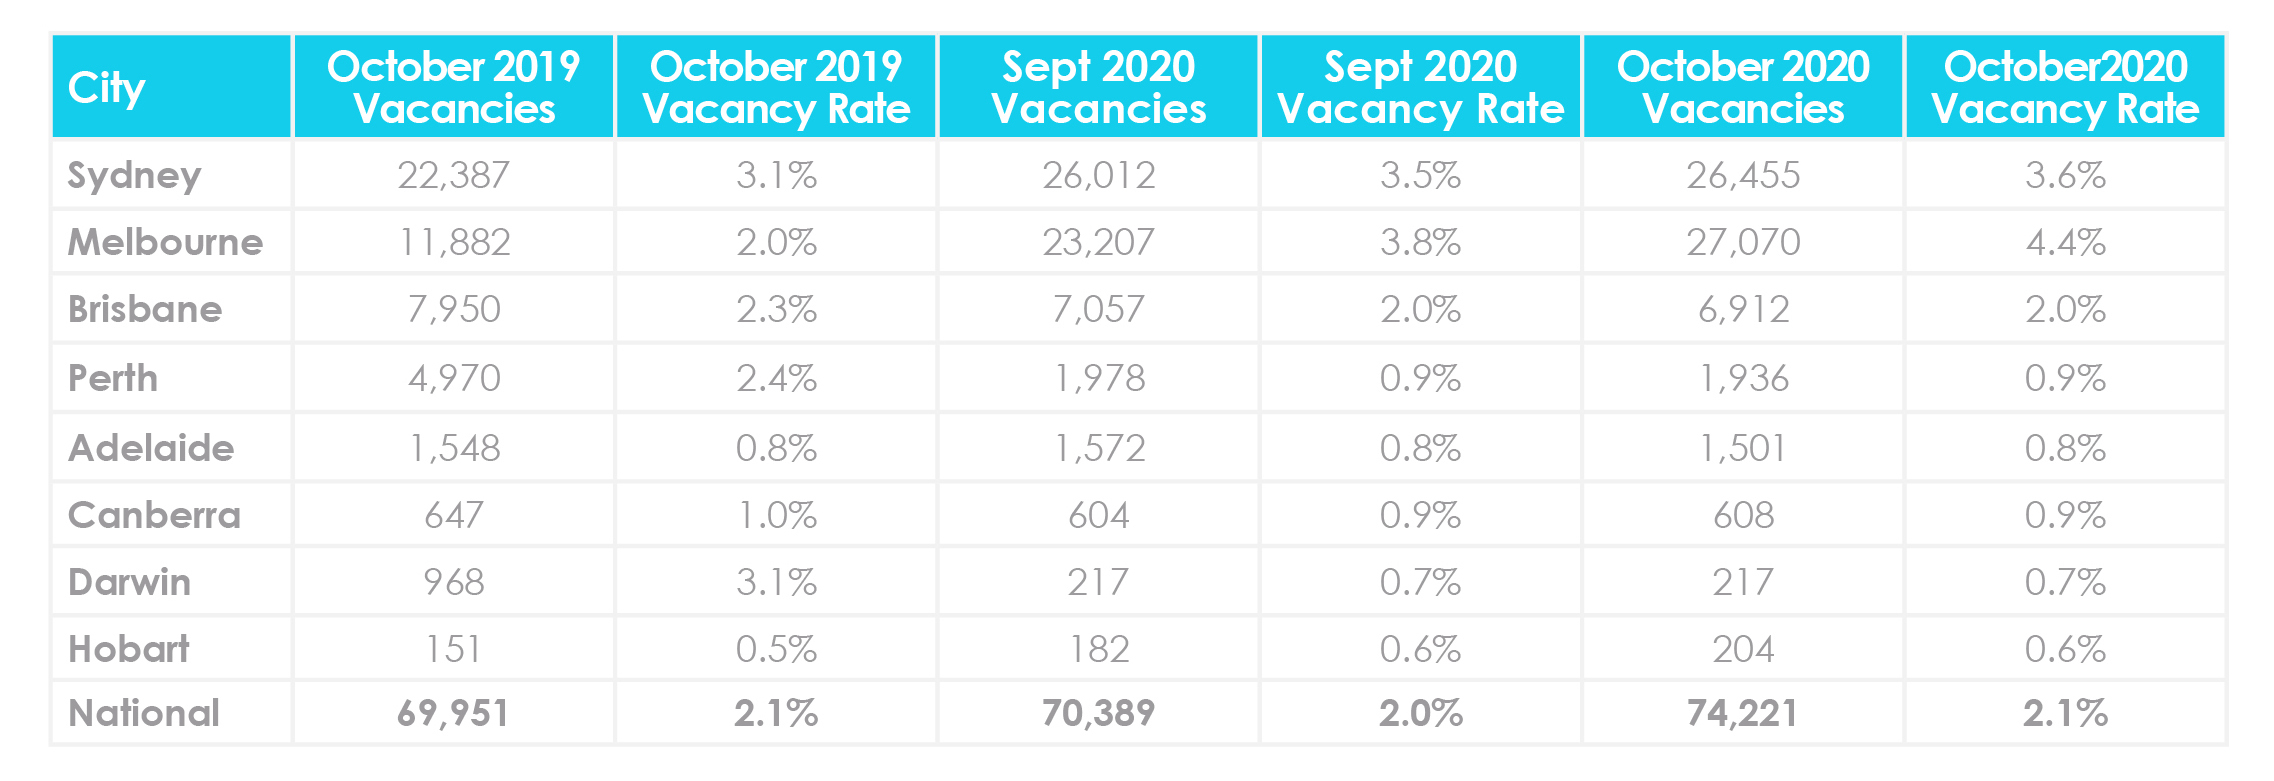 November property market update 2020 Vacancy rates